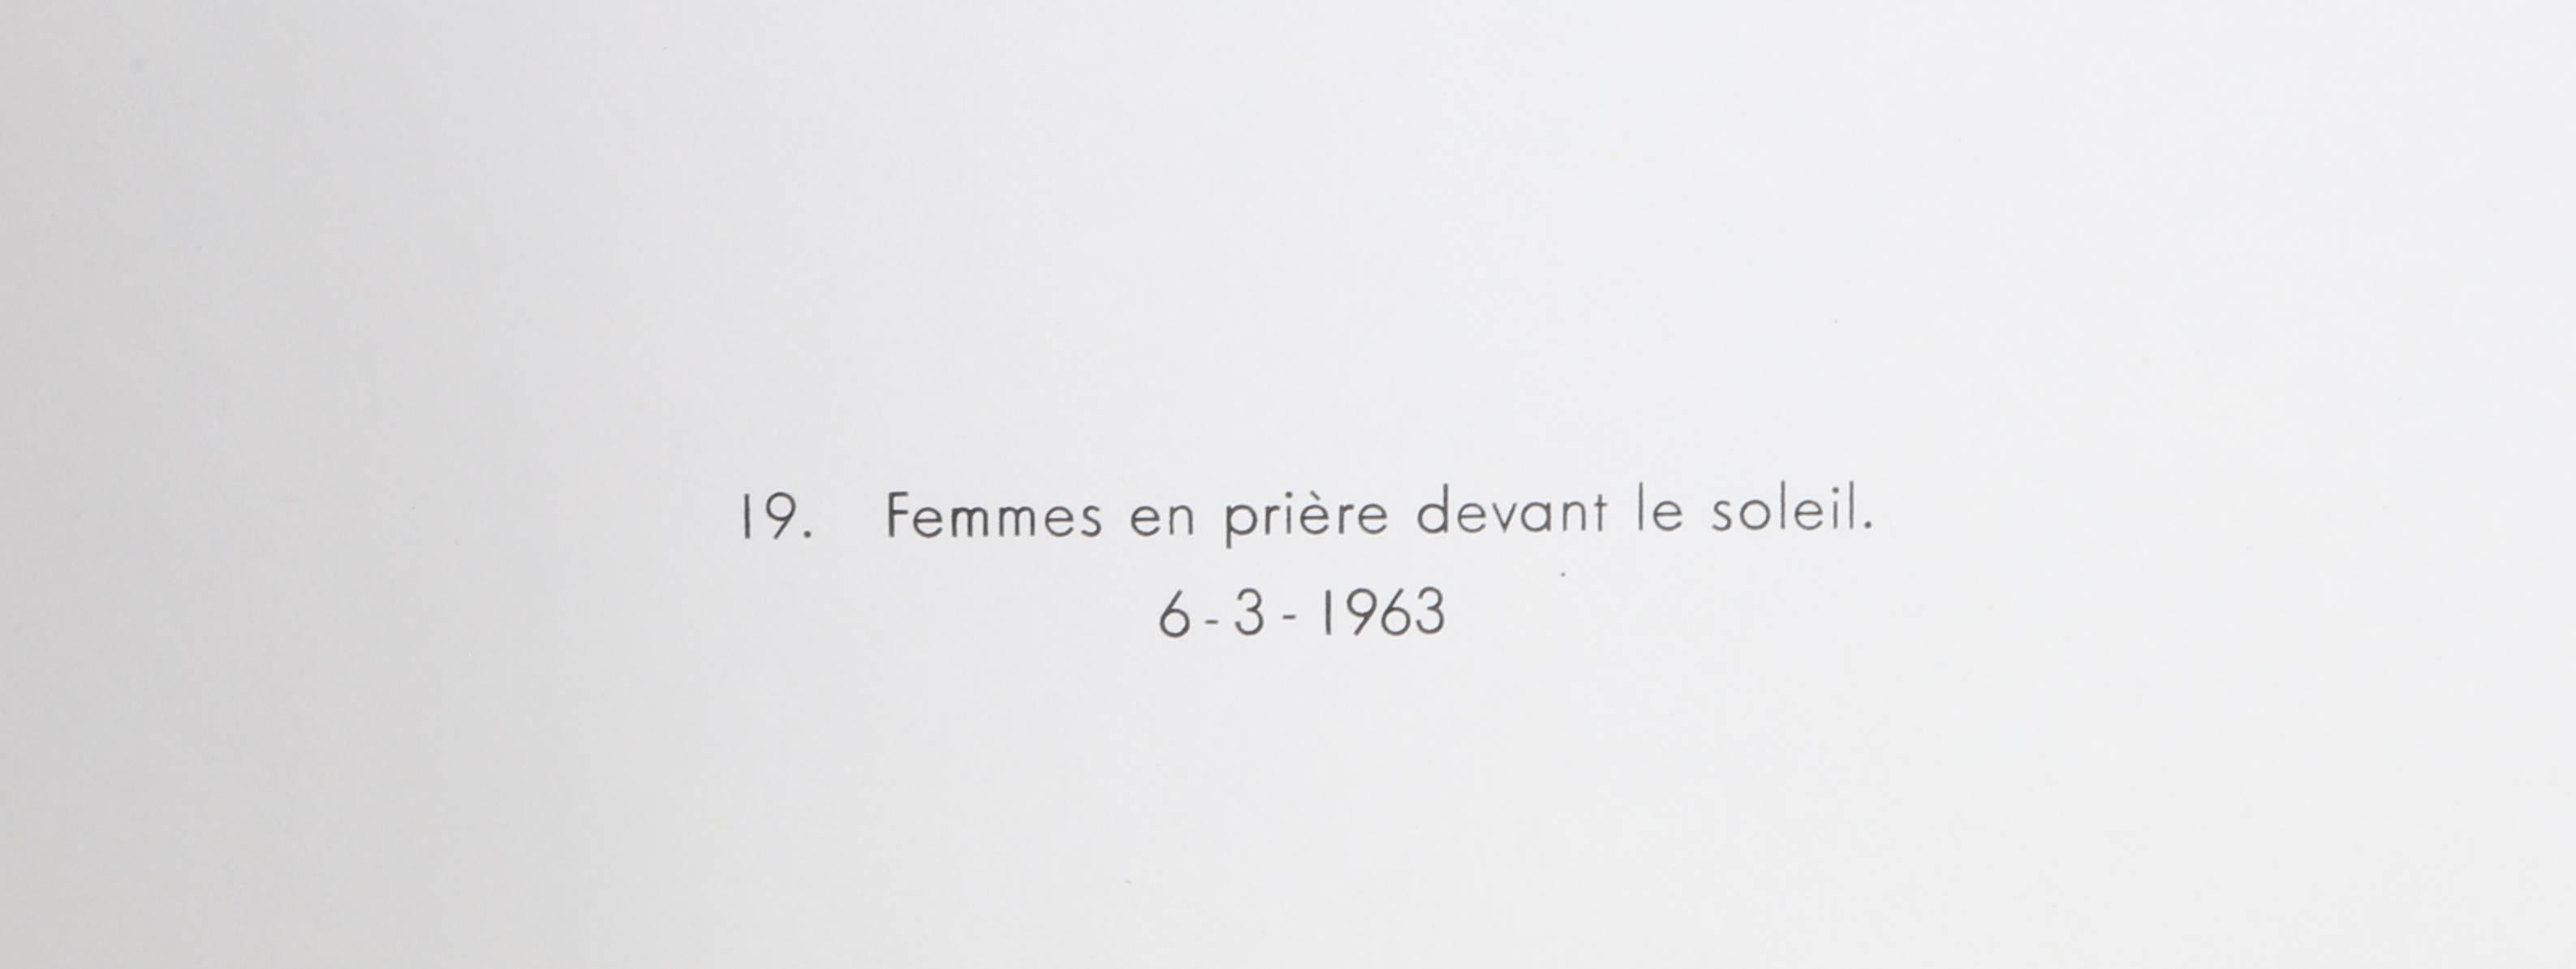 Cartones 19: Femmes en priere devant le soleil, by Joan Miro - Print by Joan Miró